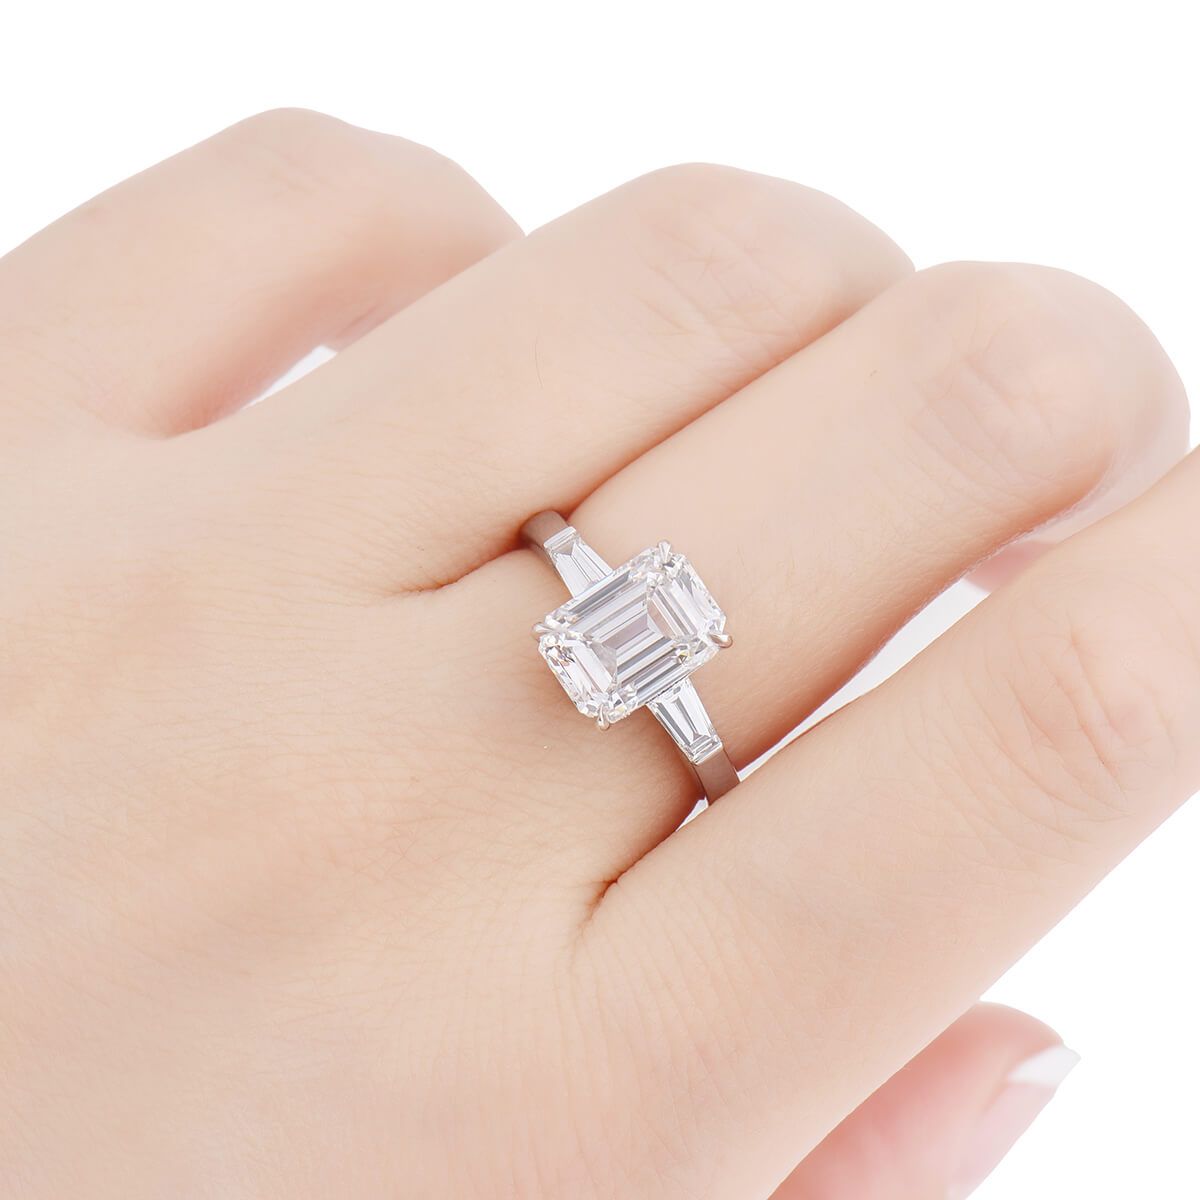  White Diamond Ring, 3.38 Ct. TW, Emerald shape, GIA Certified, 2217083945